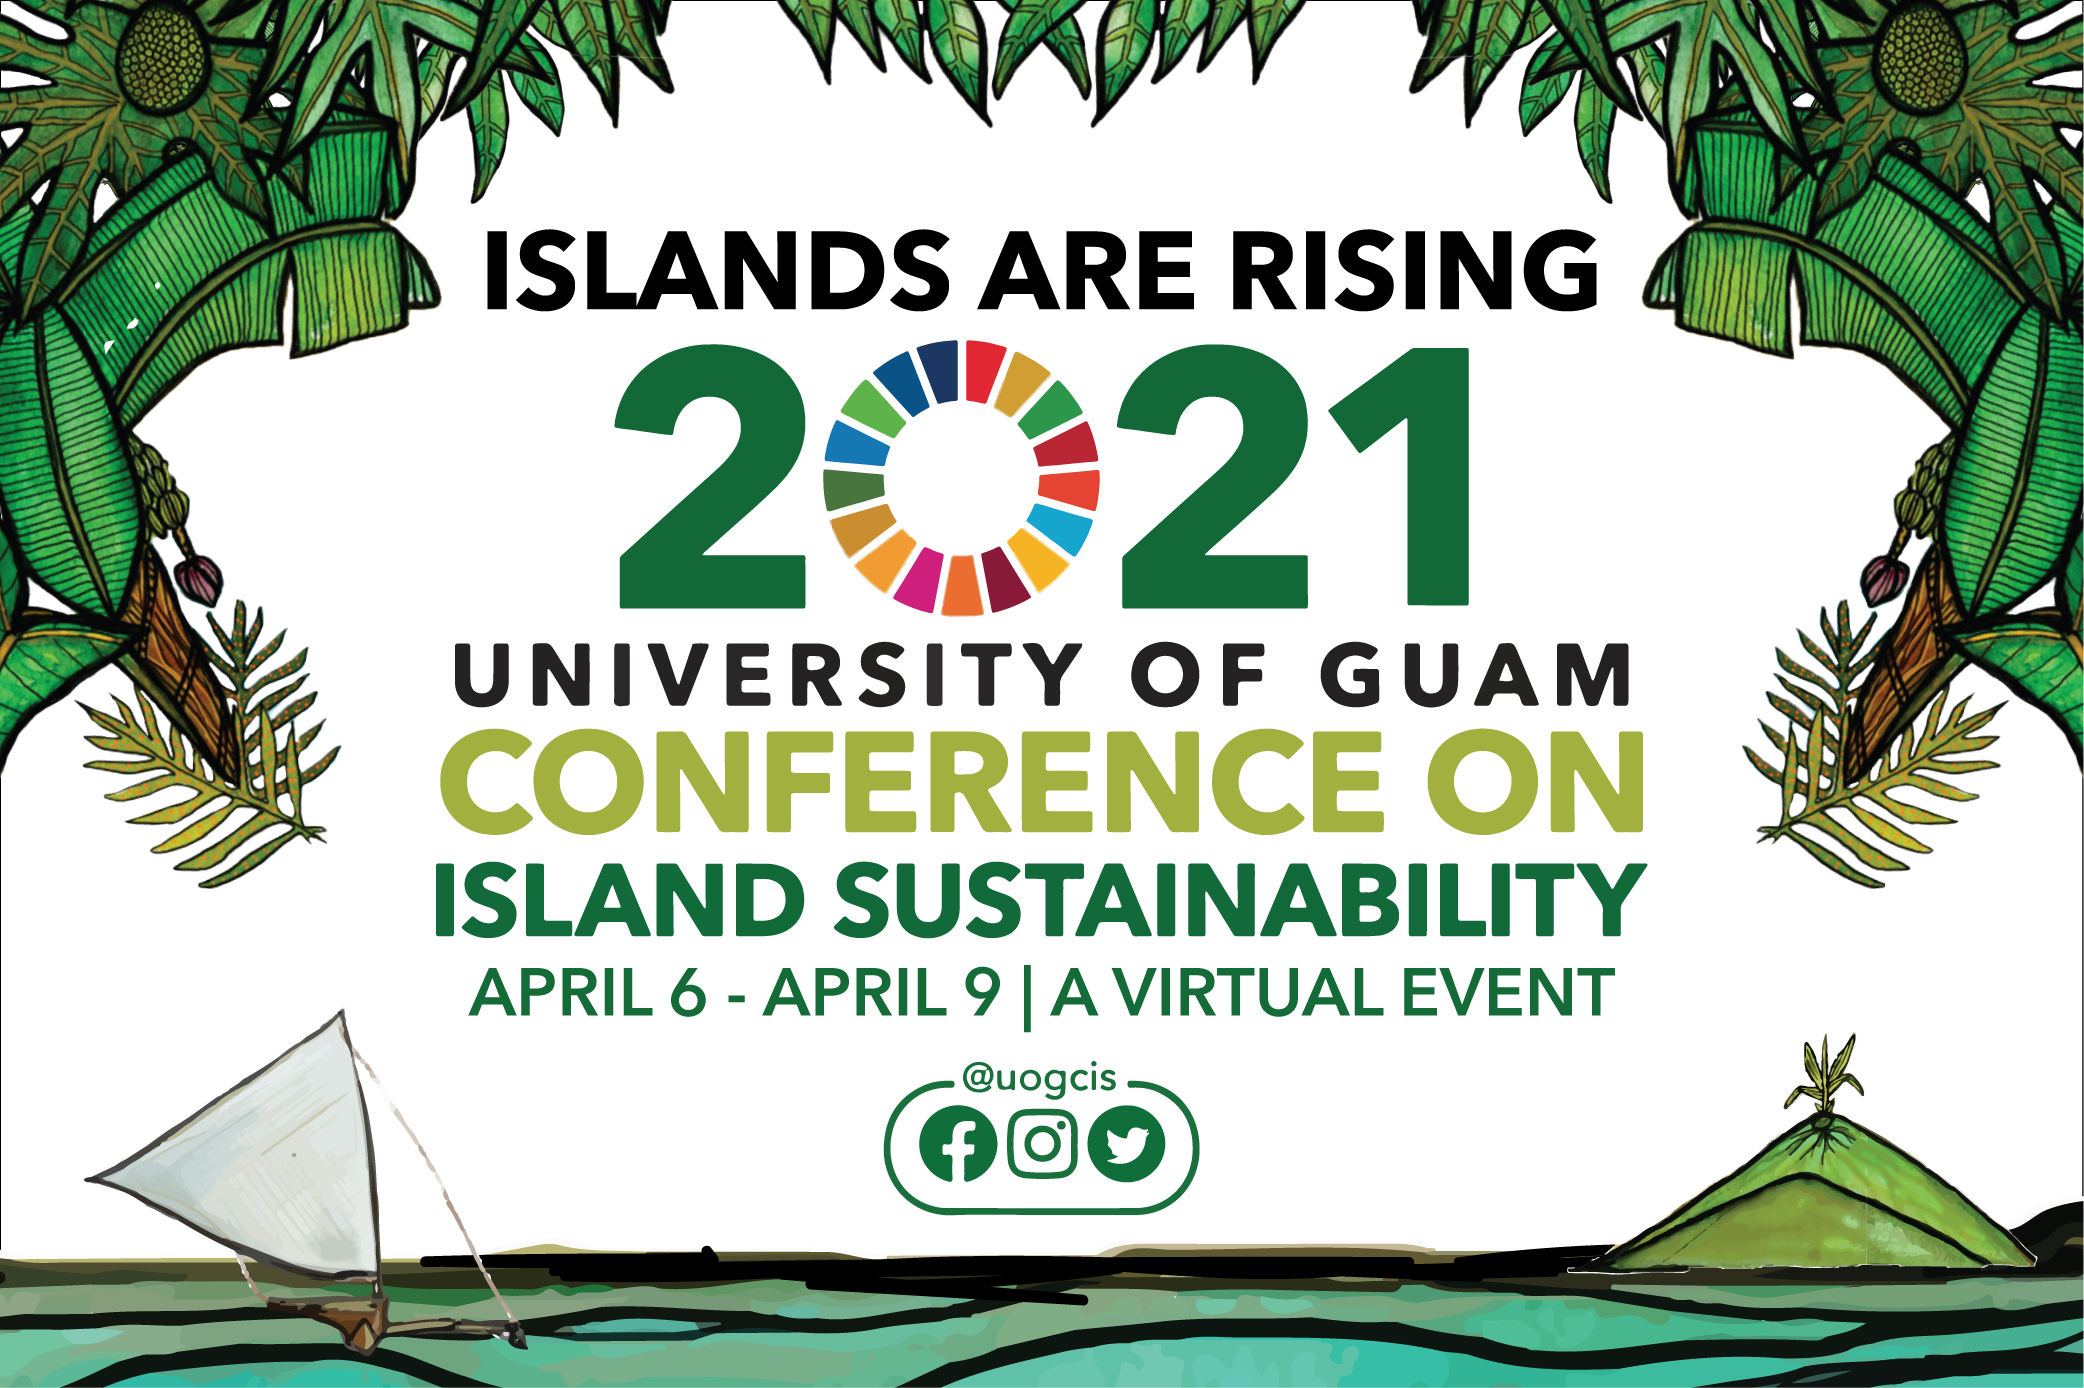 Conference on Island Sustainability